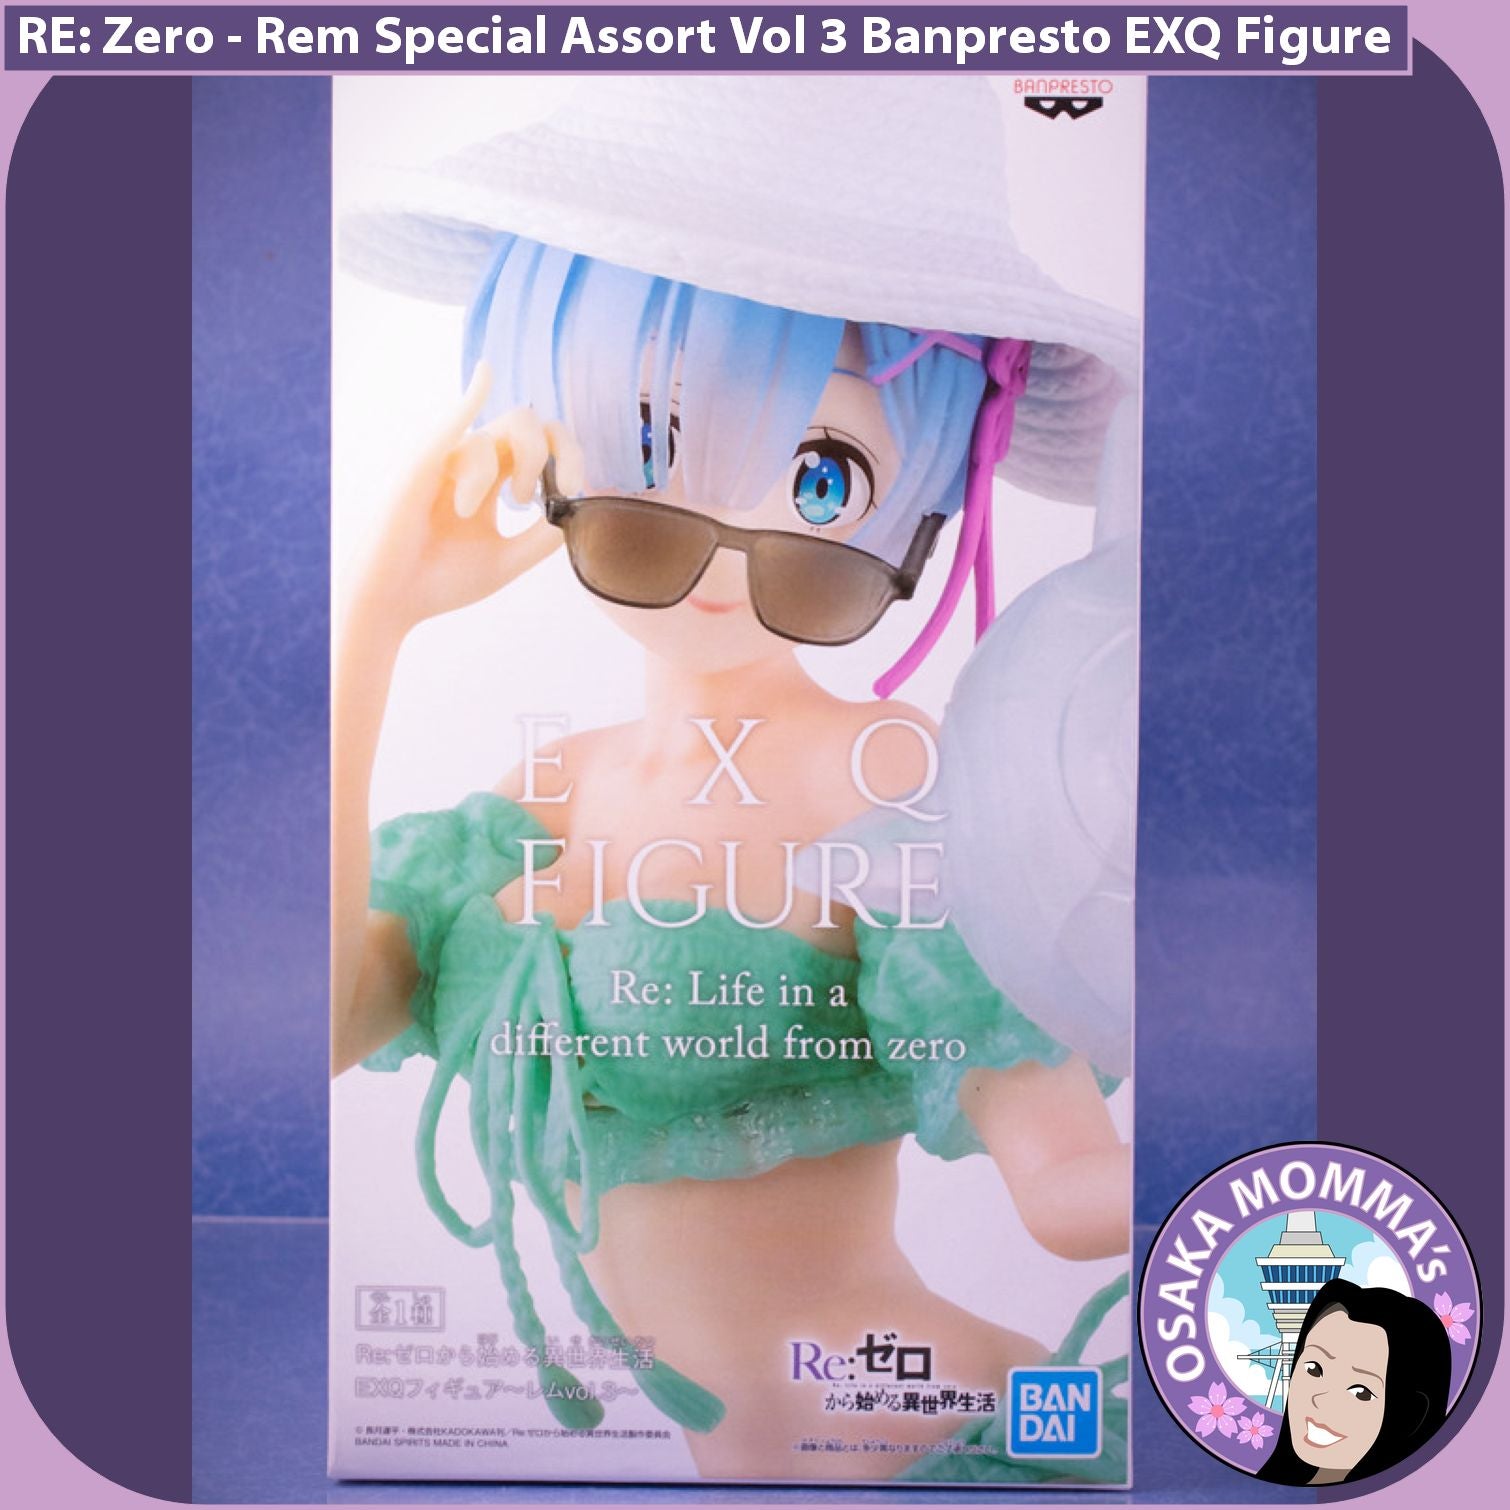 Re:ZERO -Starting Life in Another World-, Vol. 11 (light novel